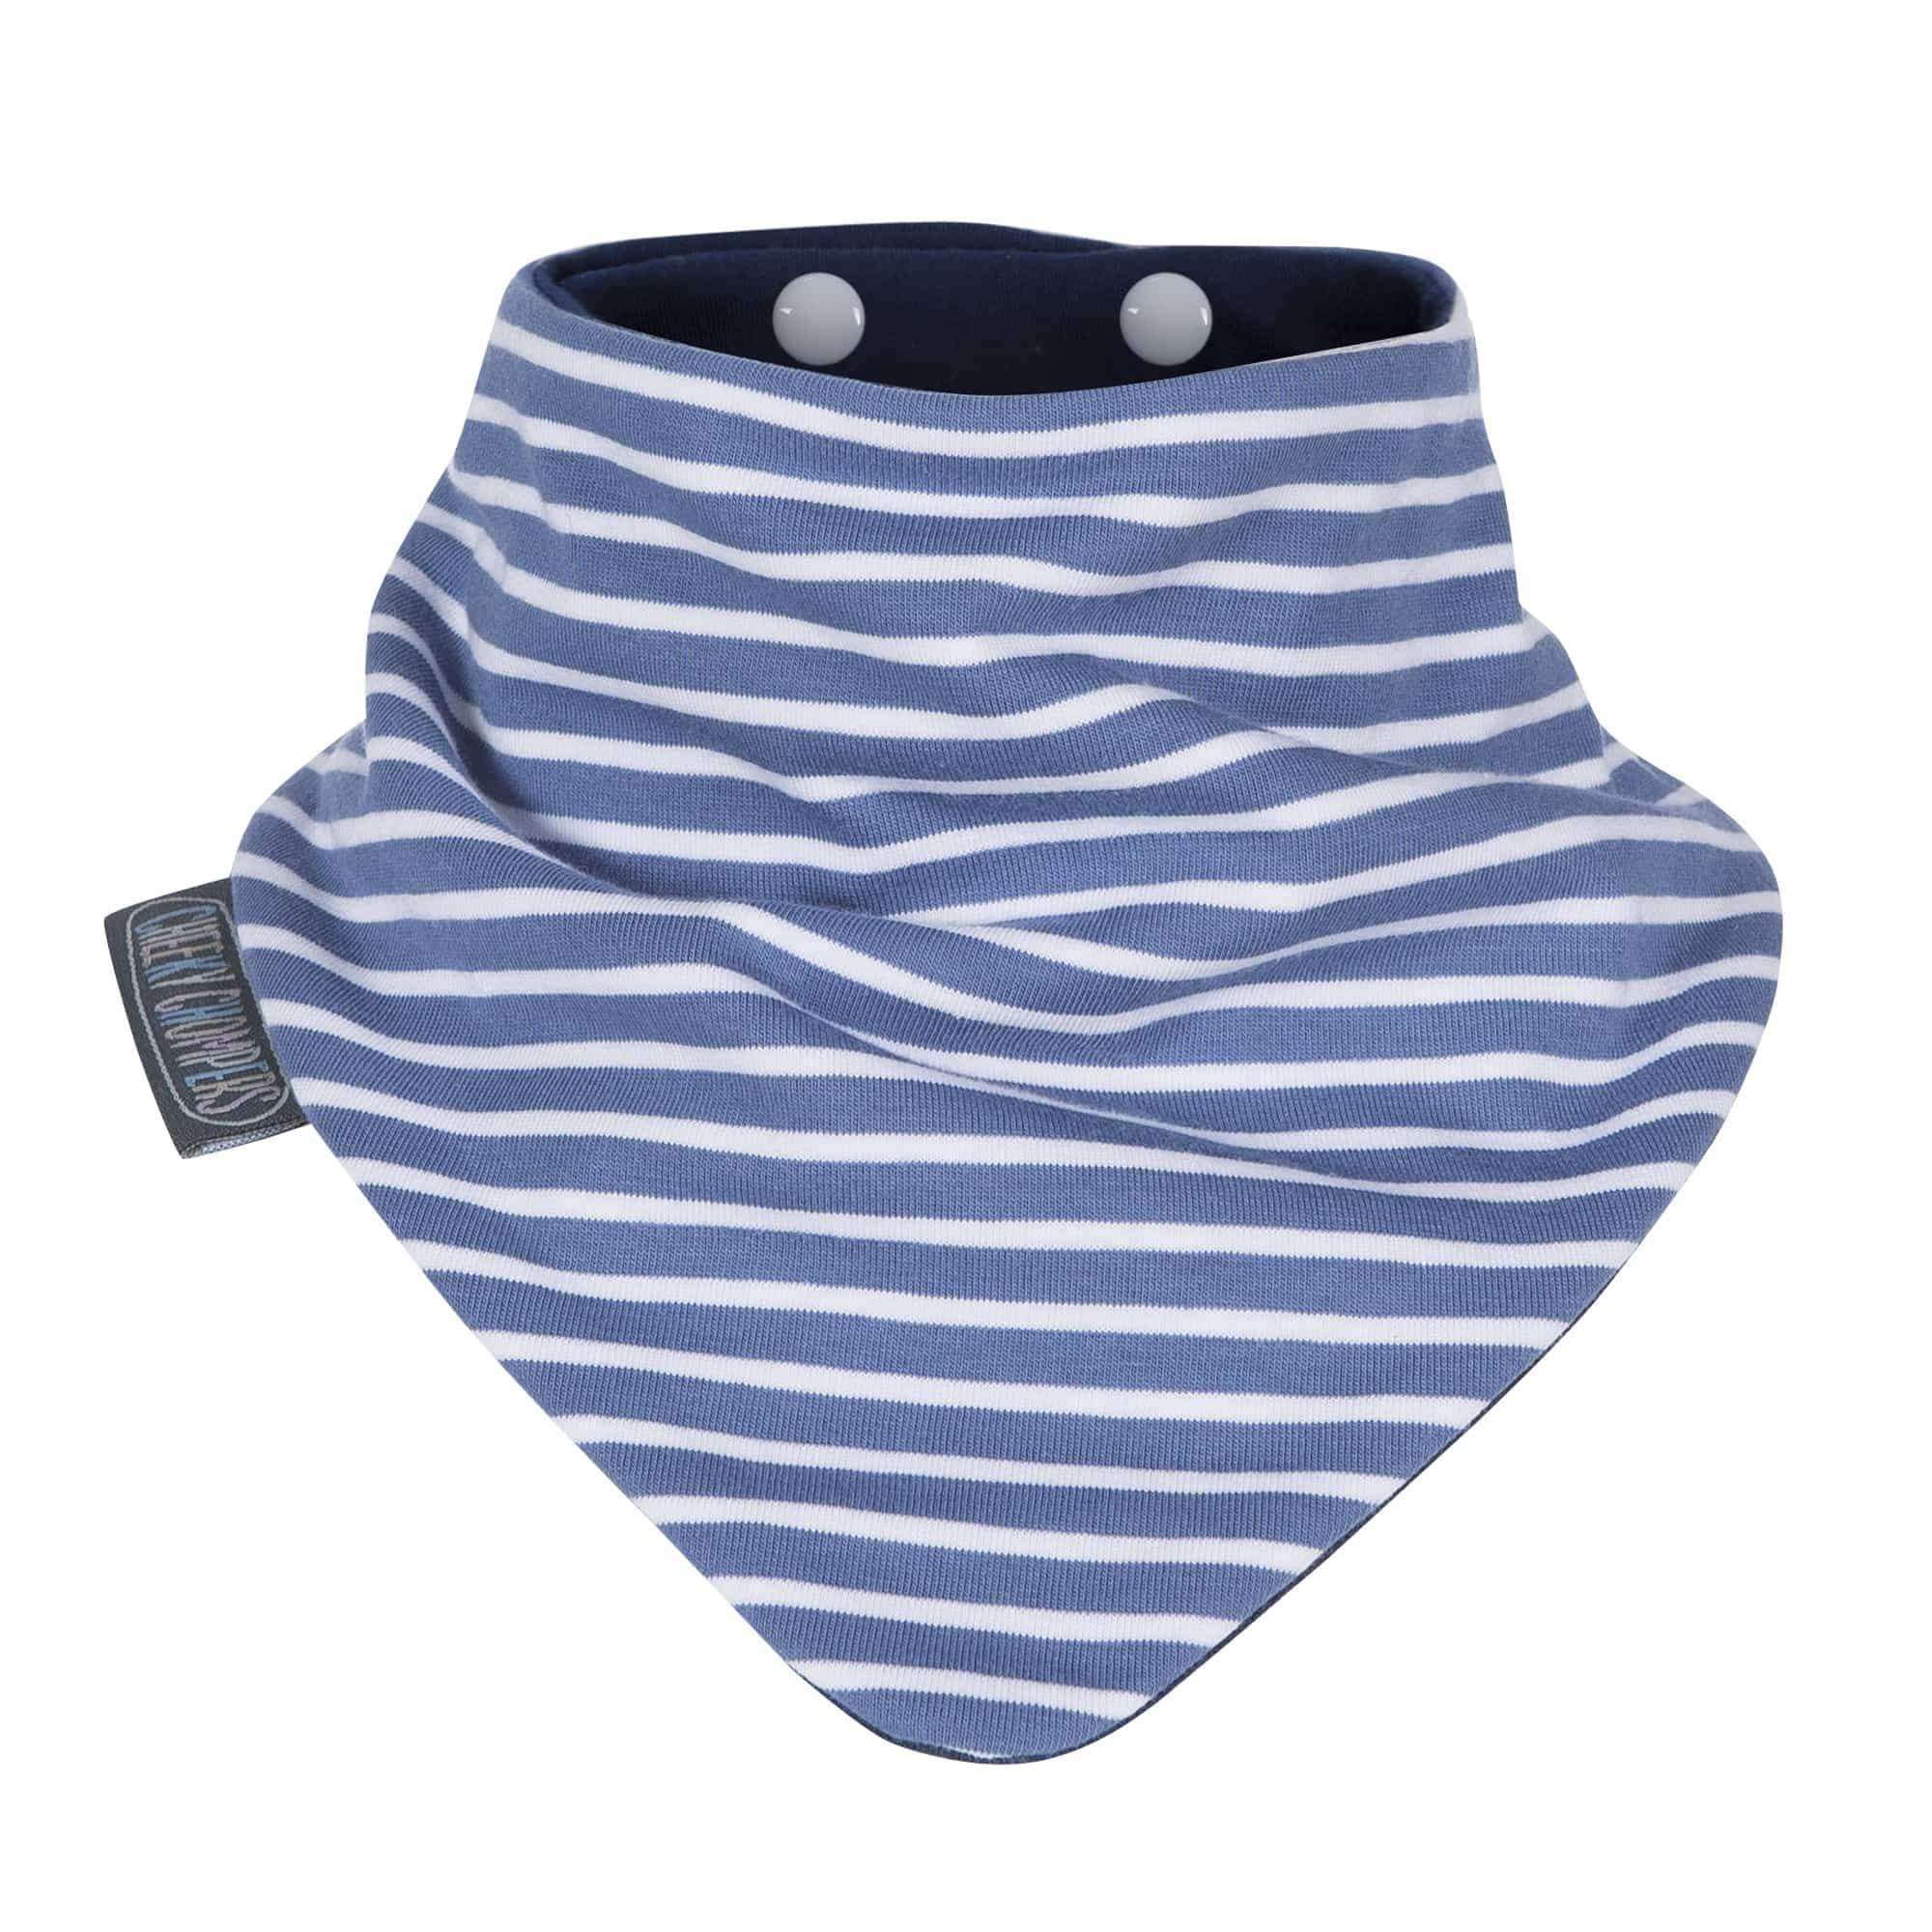 Dribble bib, bandana style with blue and white stripes.